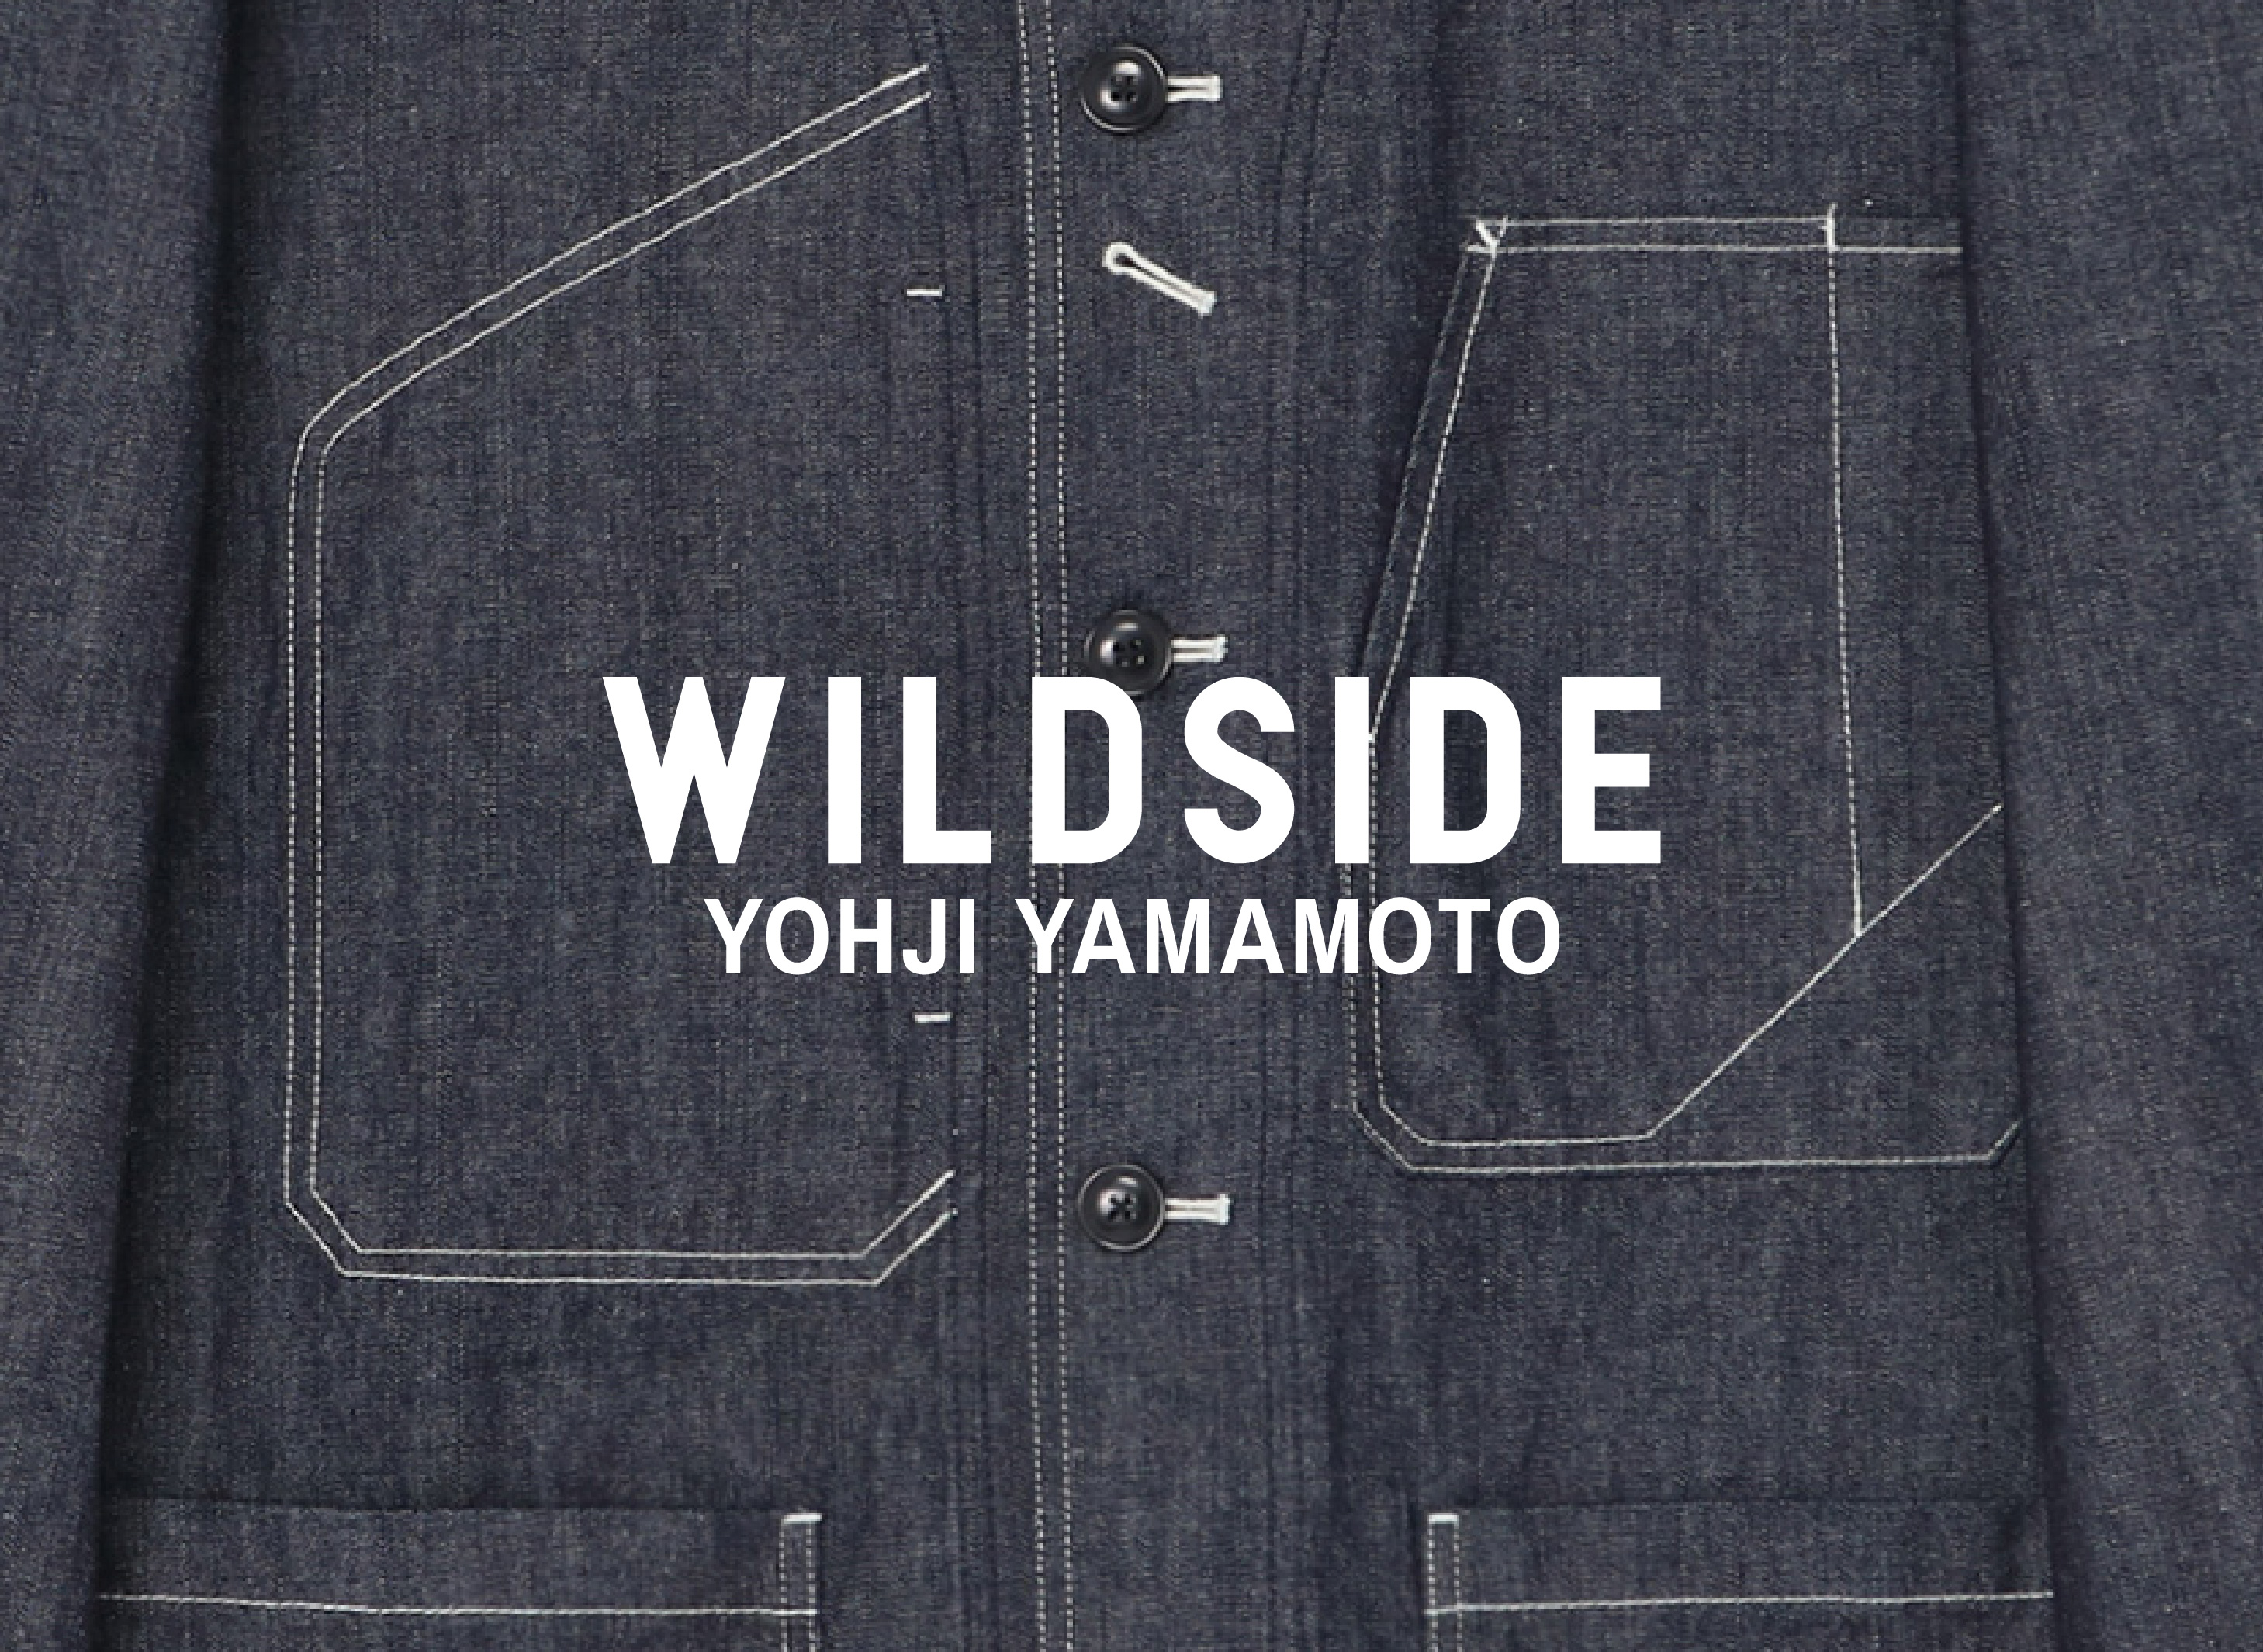 WILDSIDE YOHJI YAMAMOTOオリジナルブランドの新作デニムジャケット